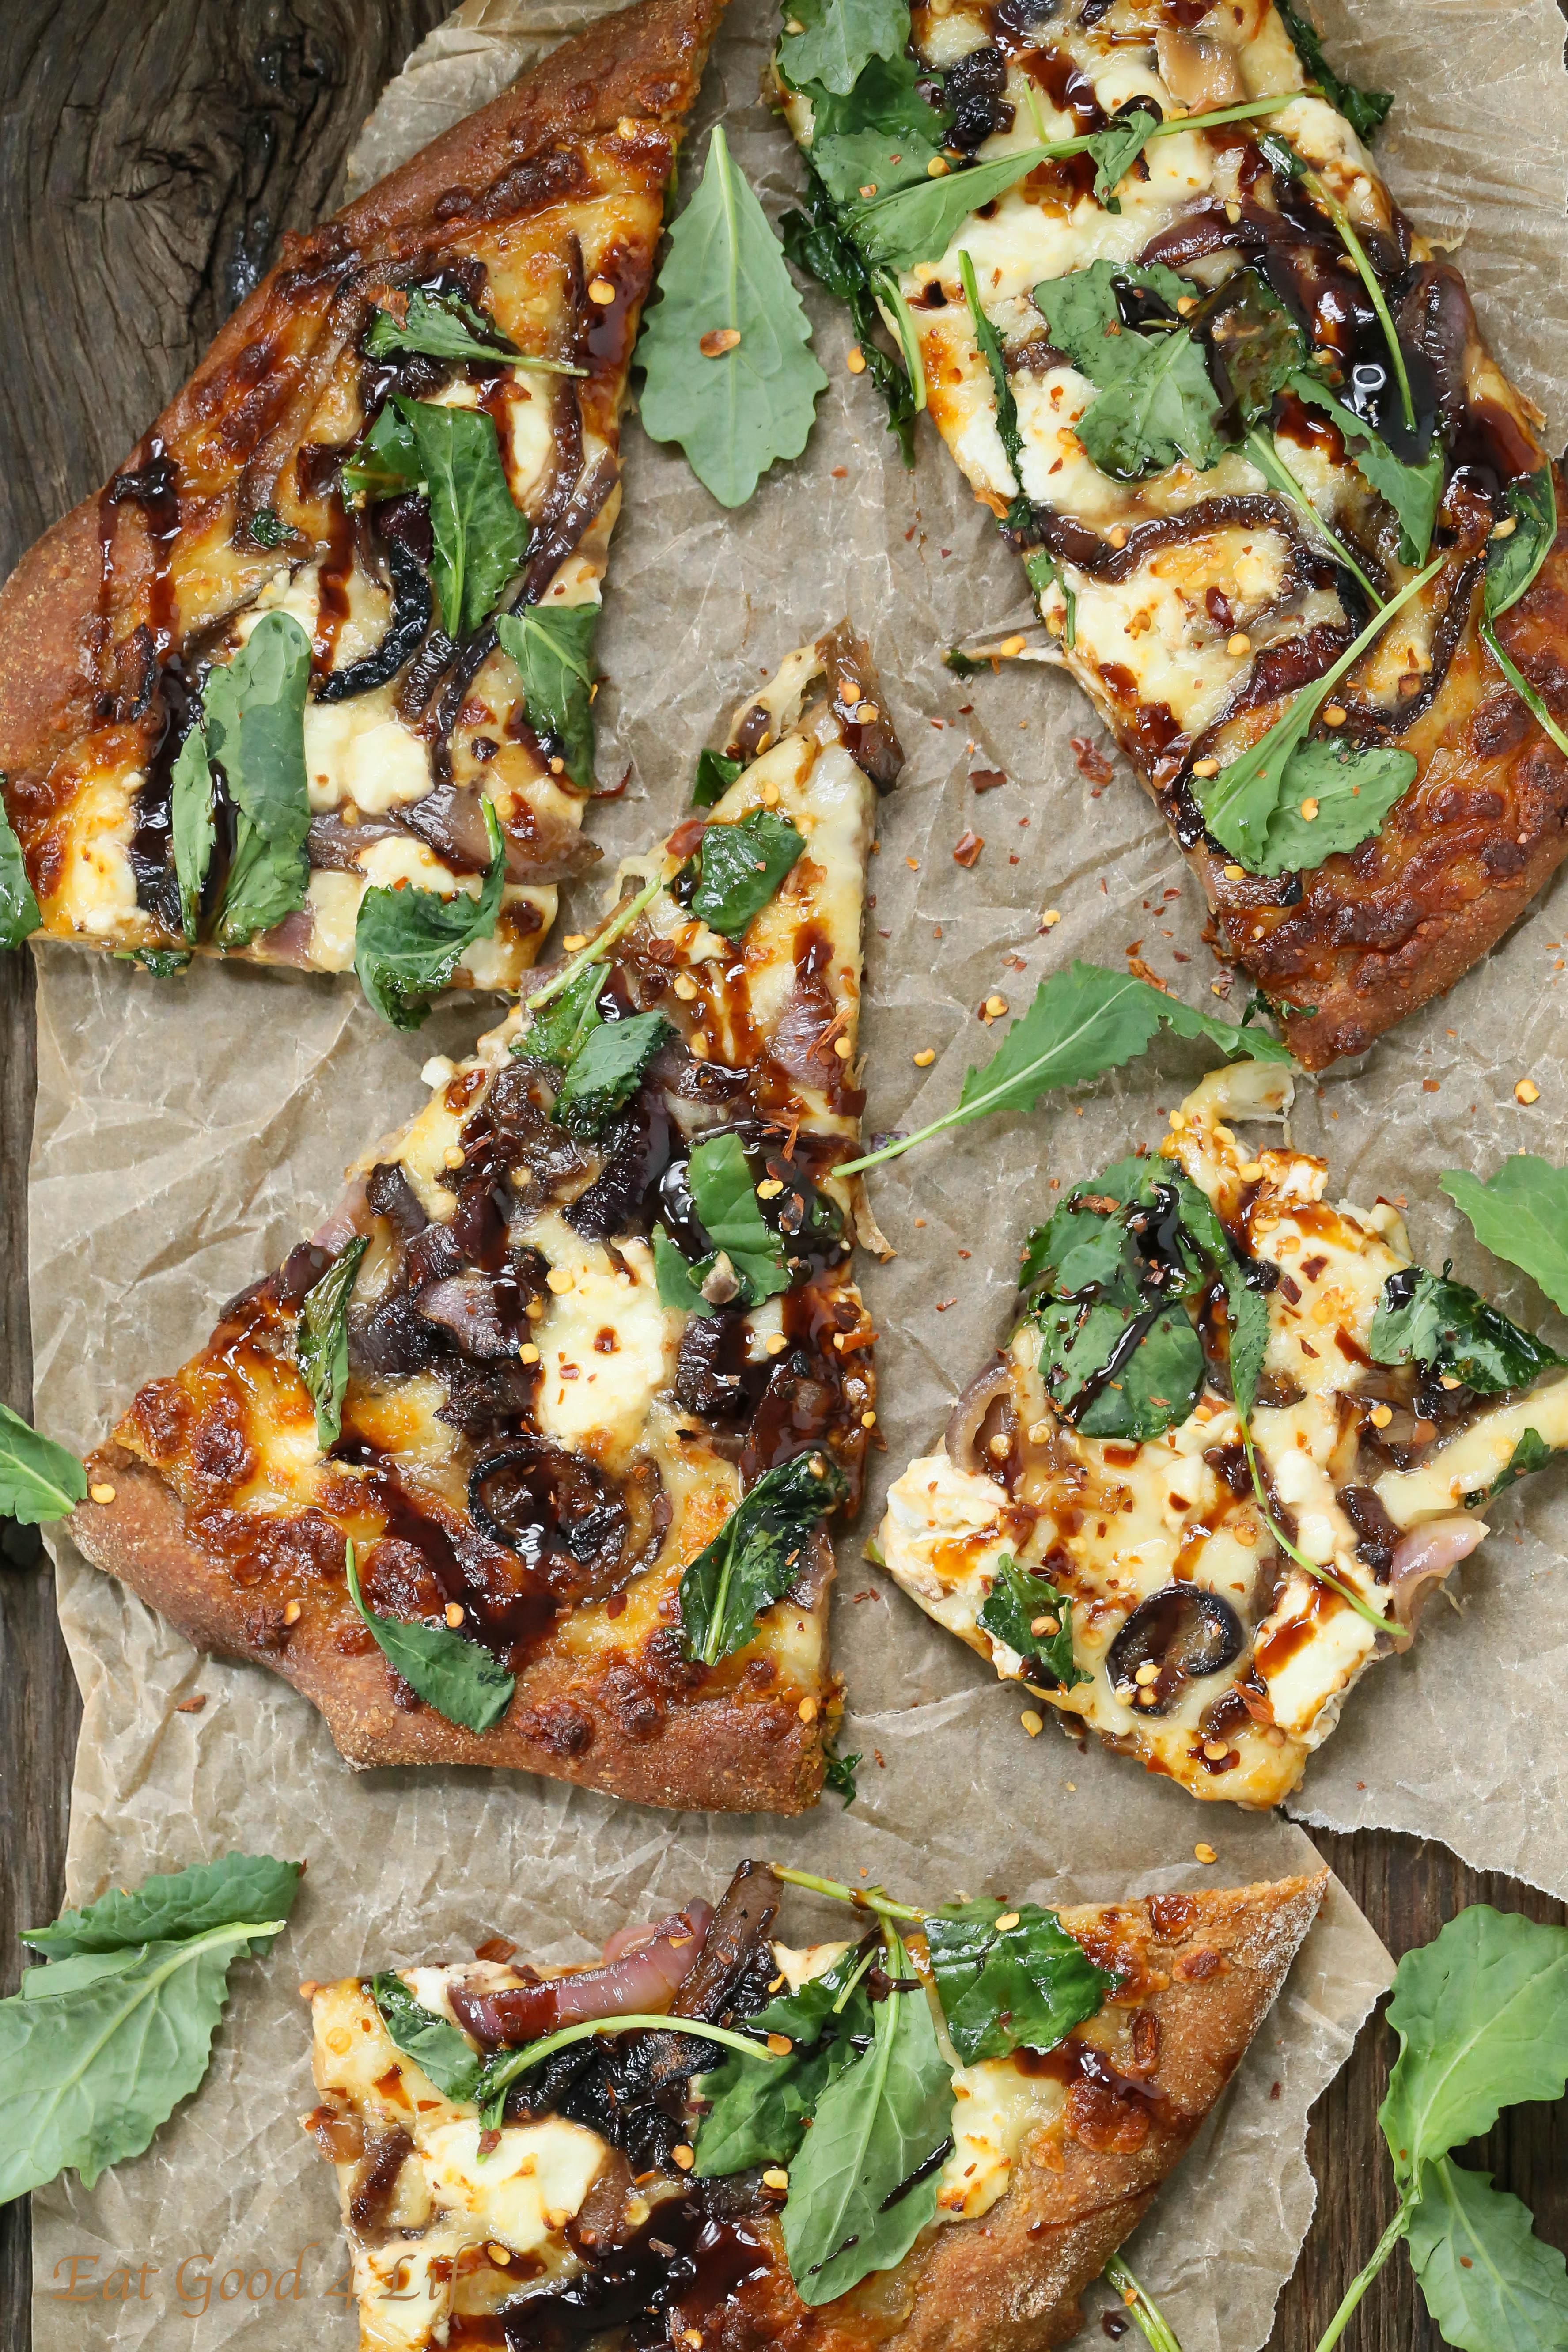 https://www.eatgood4life.com/wp-content/uploads/2015/03/caramelized-onions-kale-goat-pizza.jpg